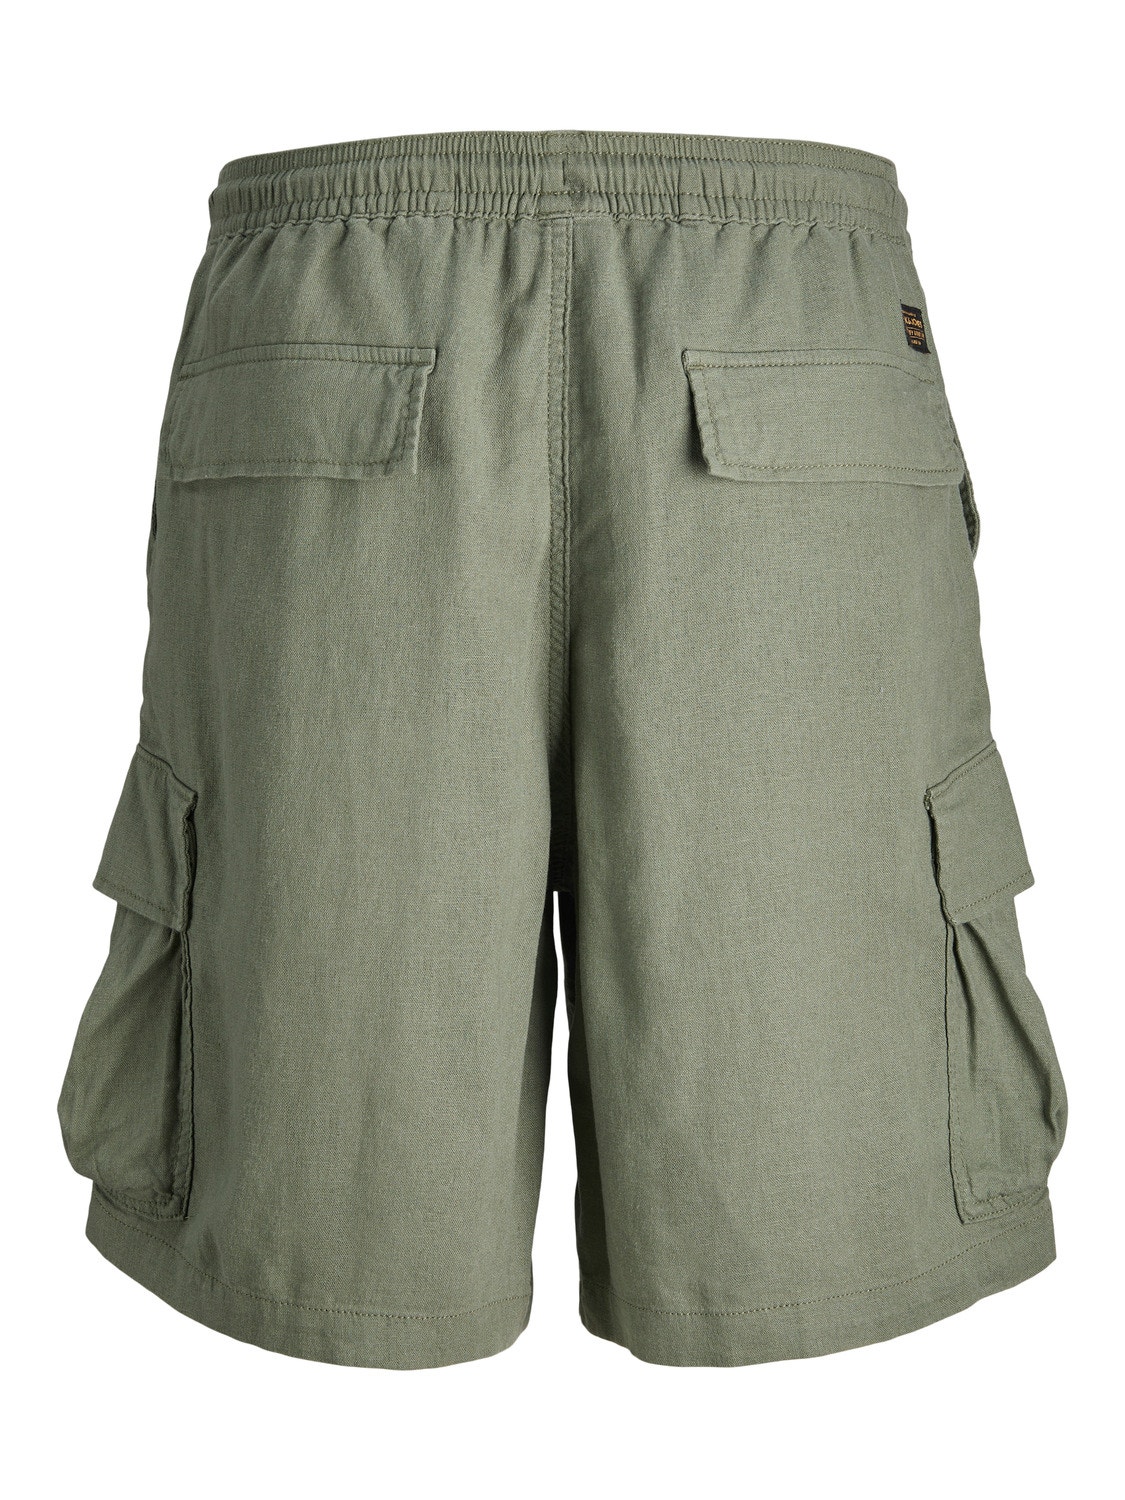 Jack & Jones Loose Fit Cargo shorts -Laurel Wreath - 12255605